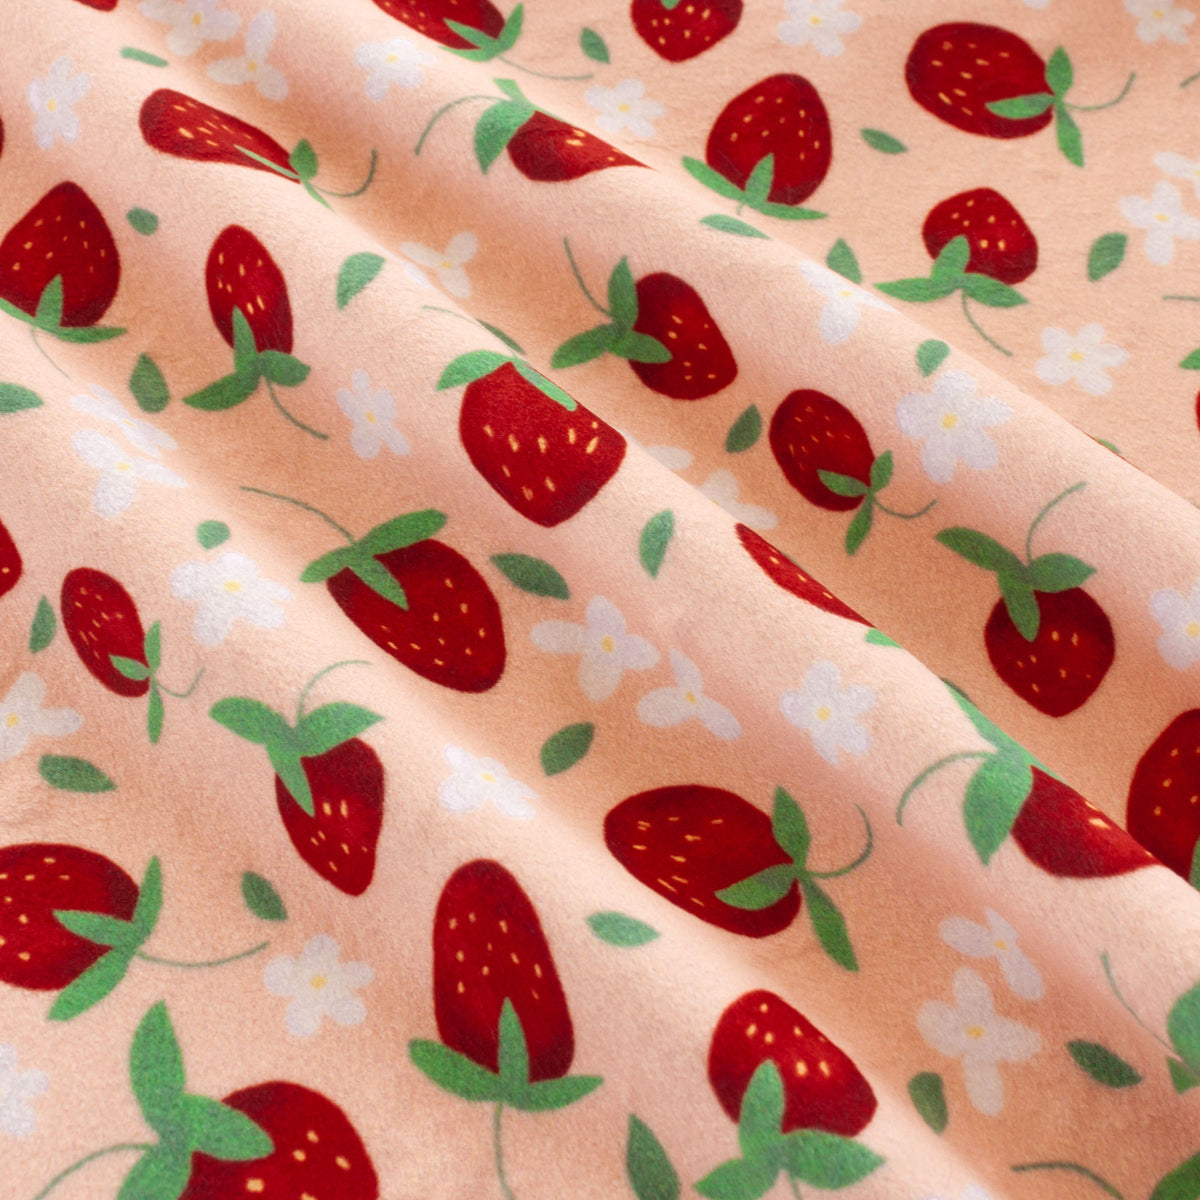 Strawberry-licious | Farmer's Market